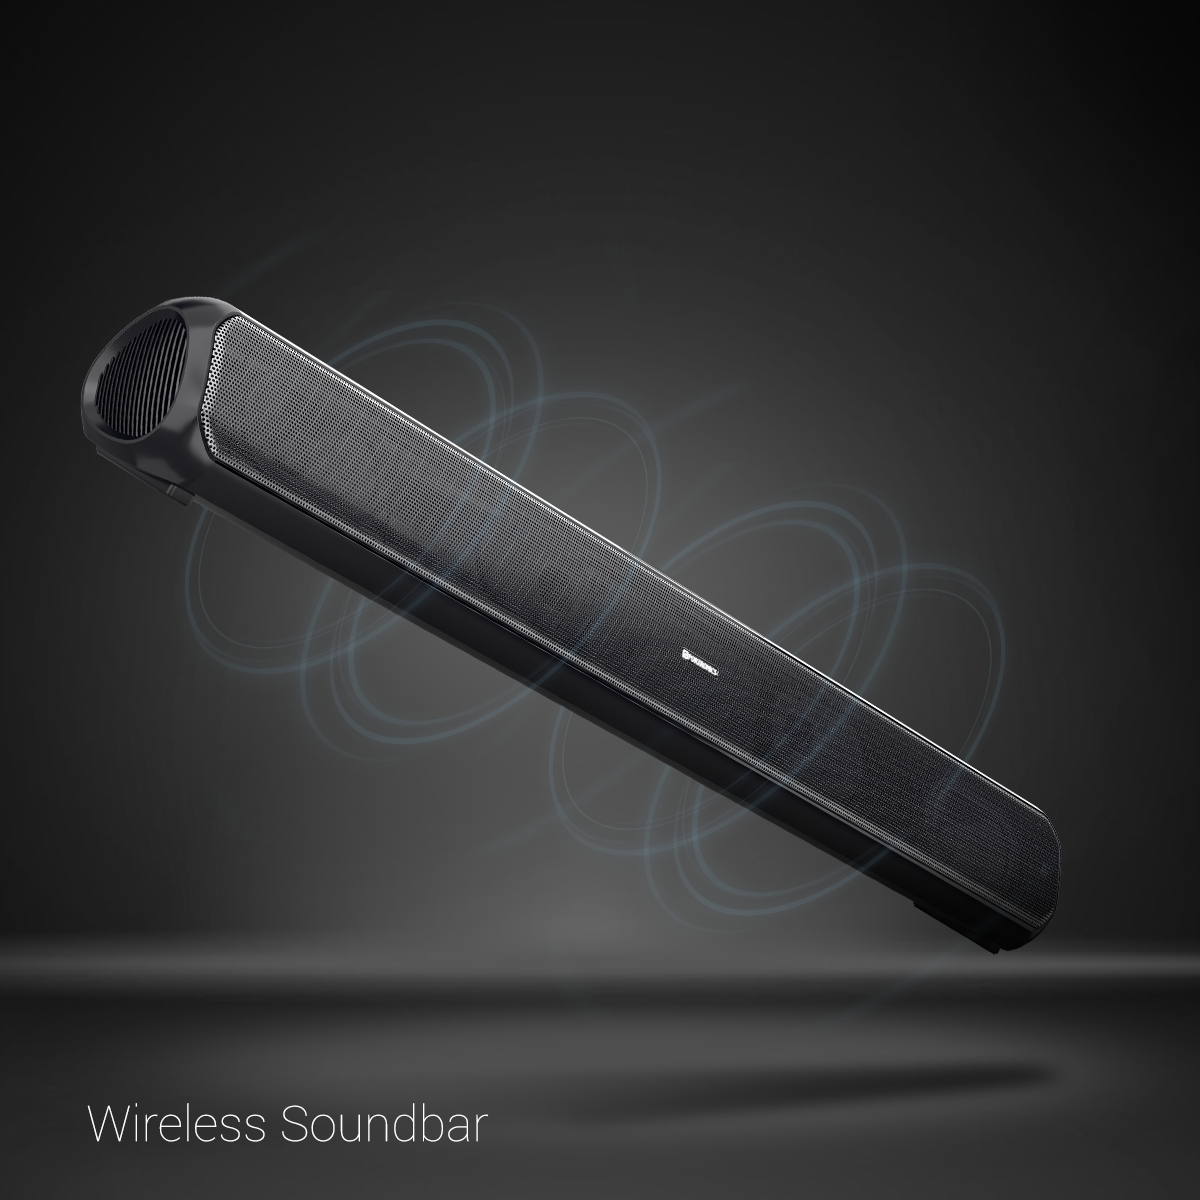 Black Portronics Sound slick 7 bluetooth speaker soundbar for tv